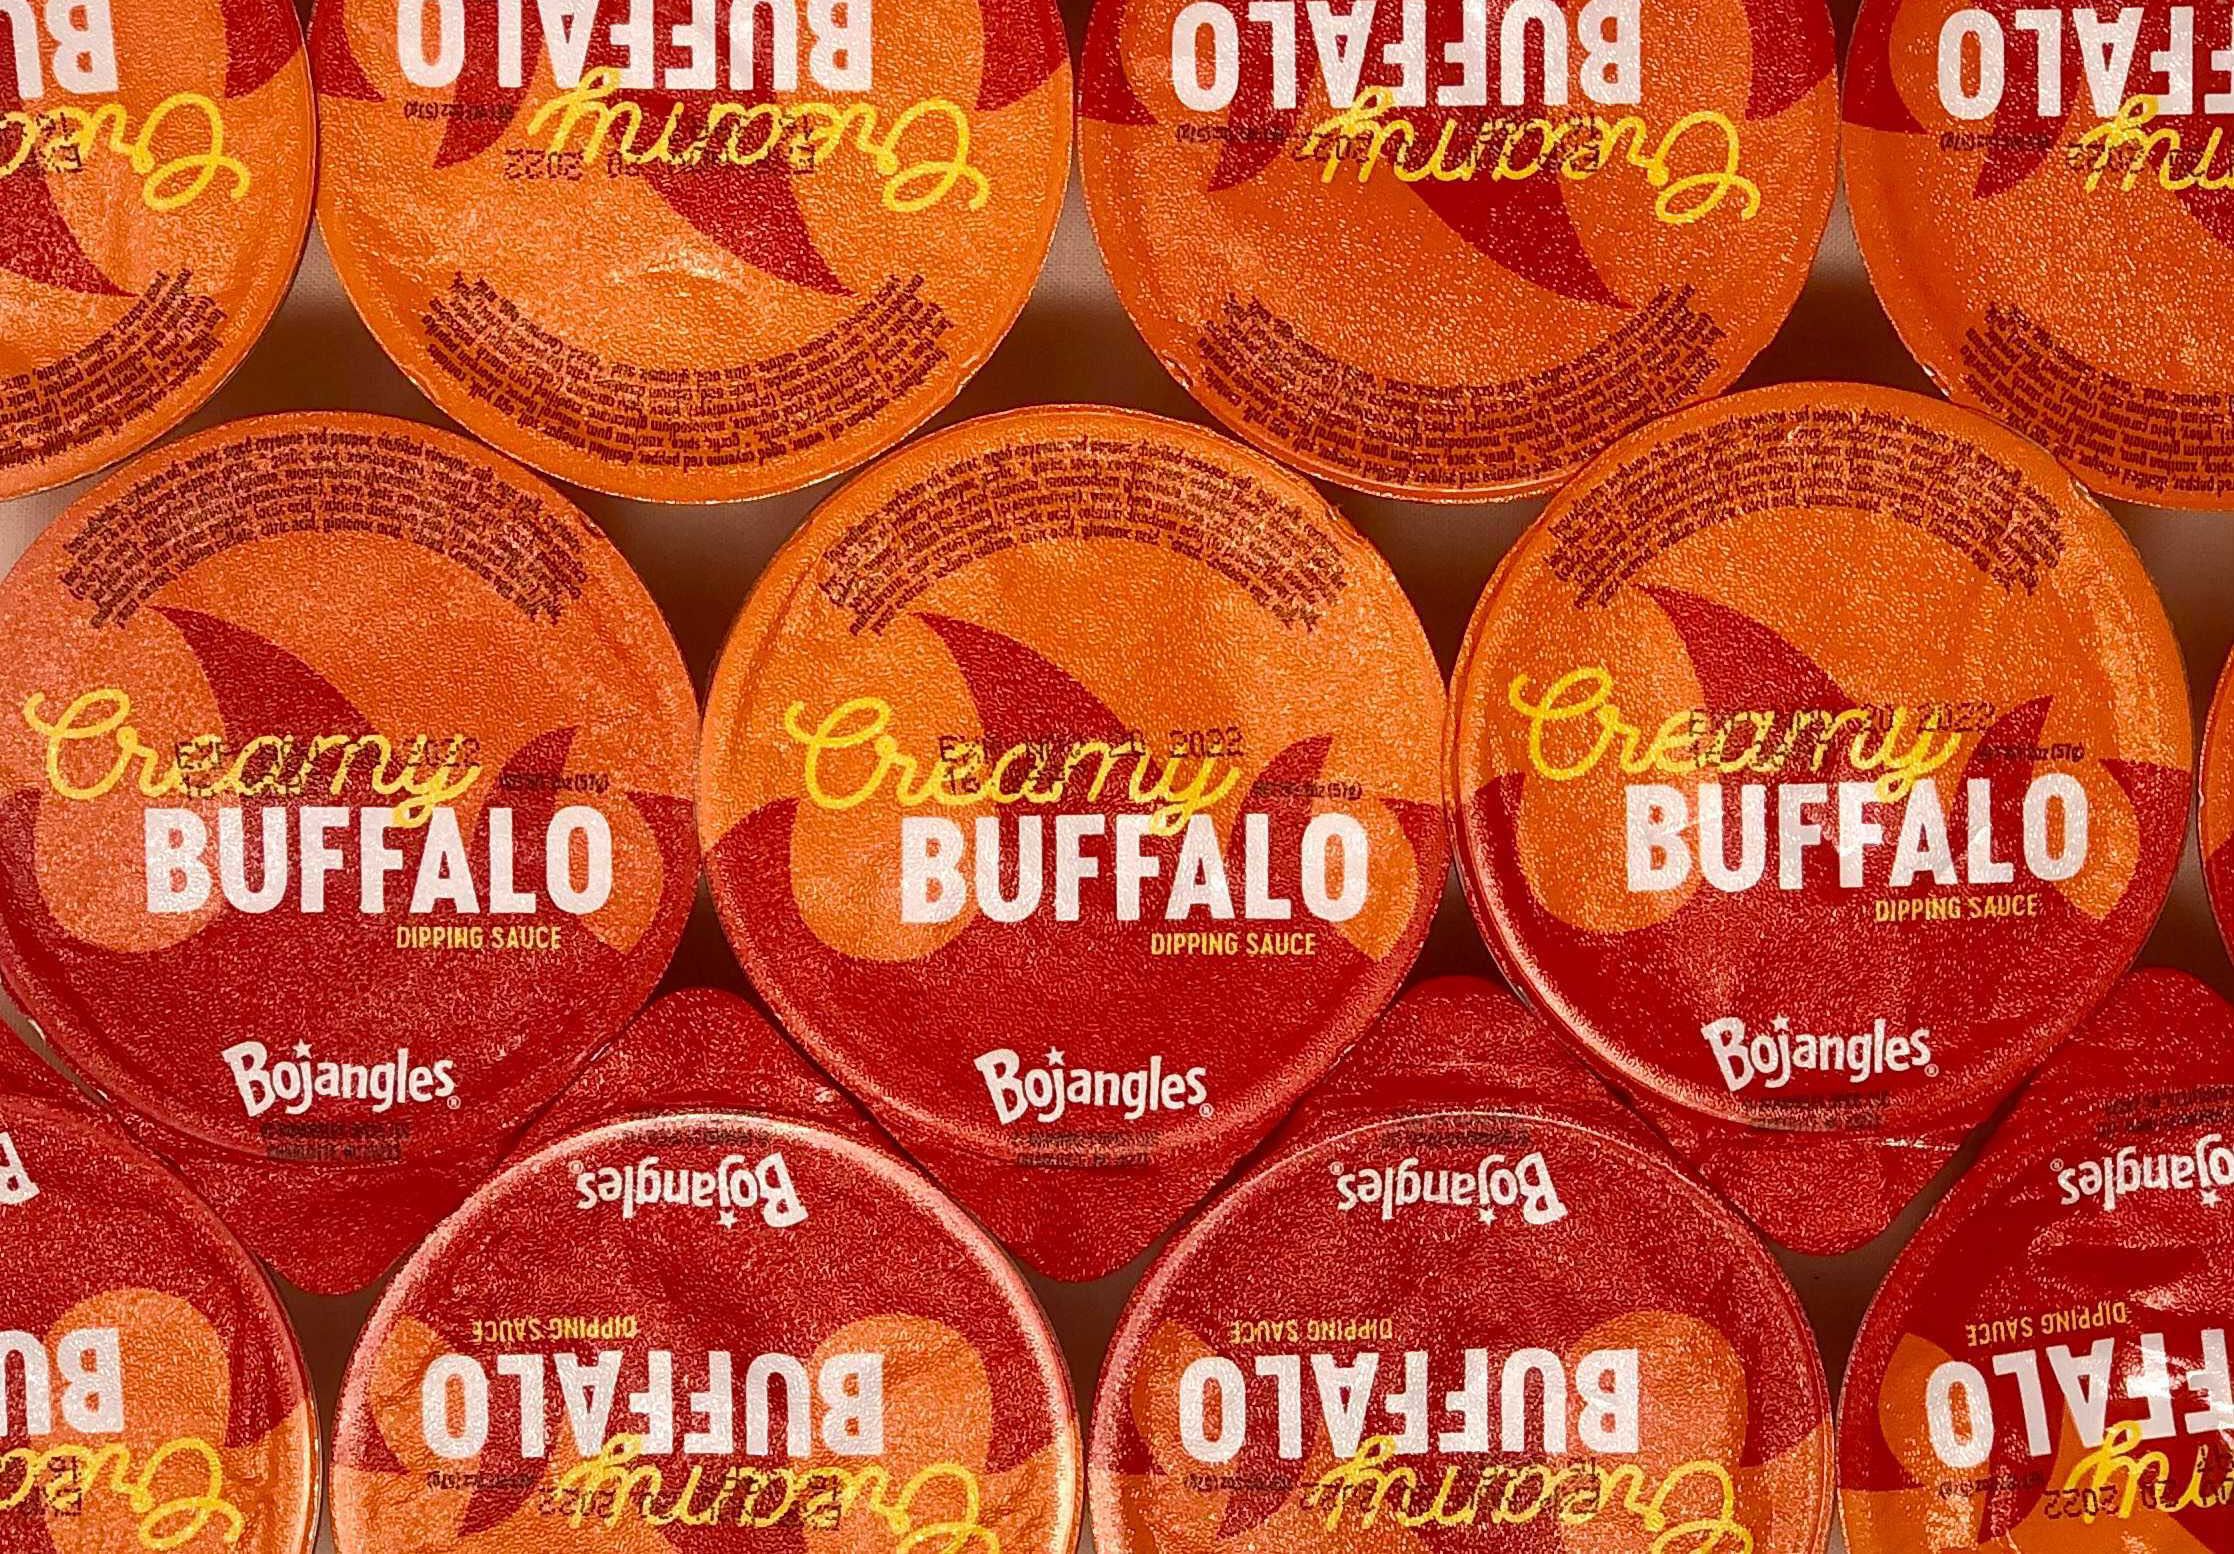 Bojangles Premiers a New Creamy Buffalo Sauce for a Limited Time